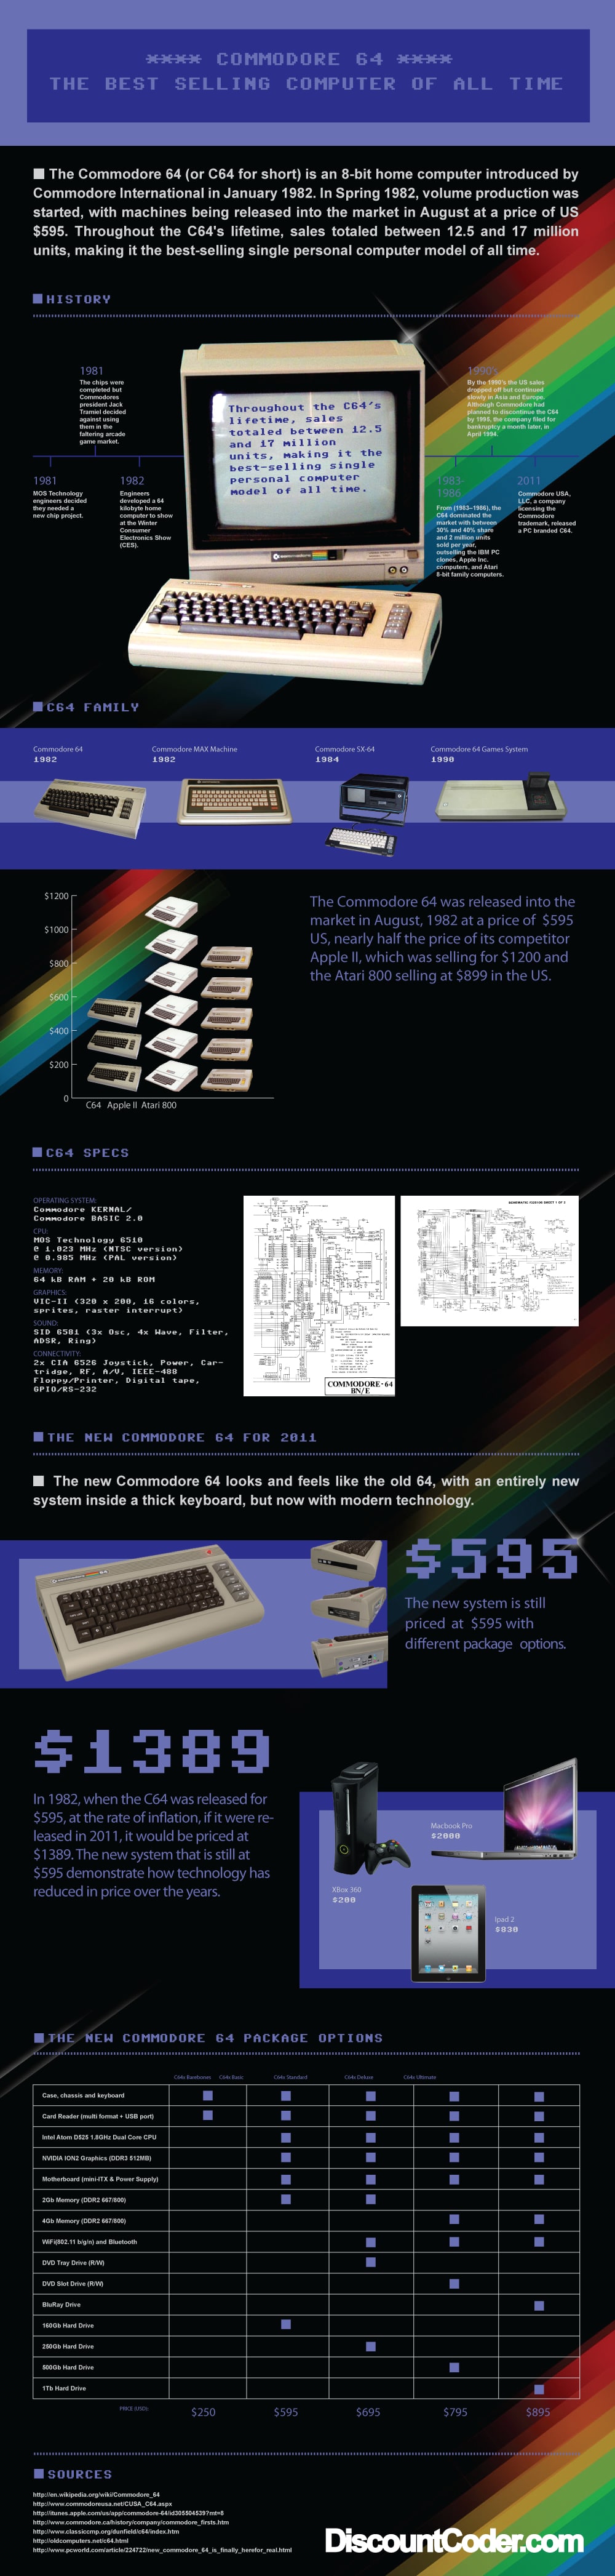 Commodore 64: A Retro History Timeline [Infographic]